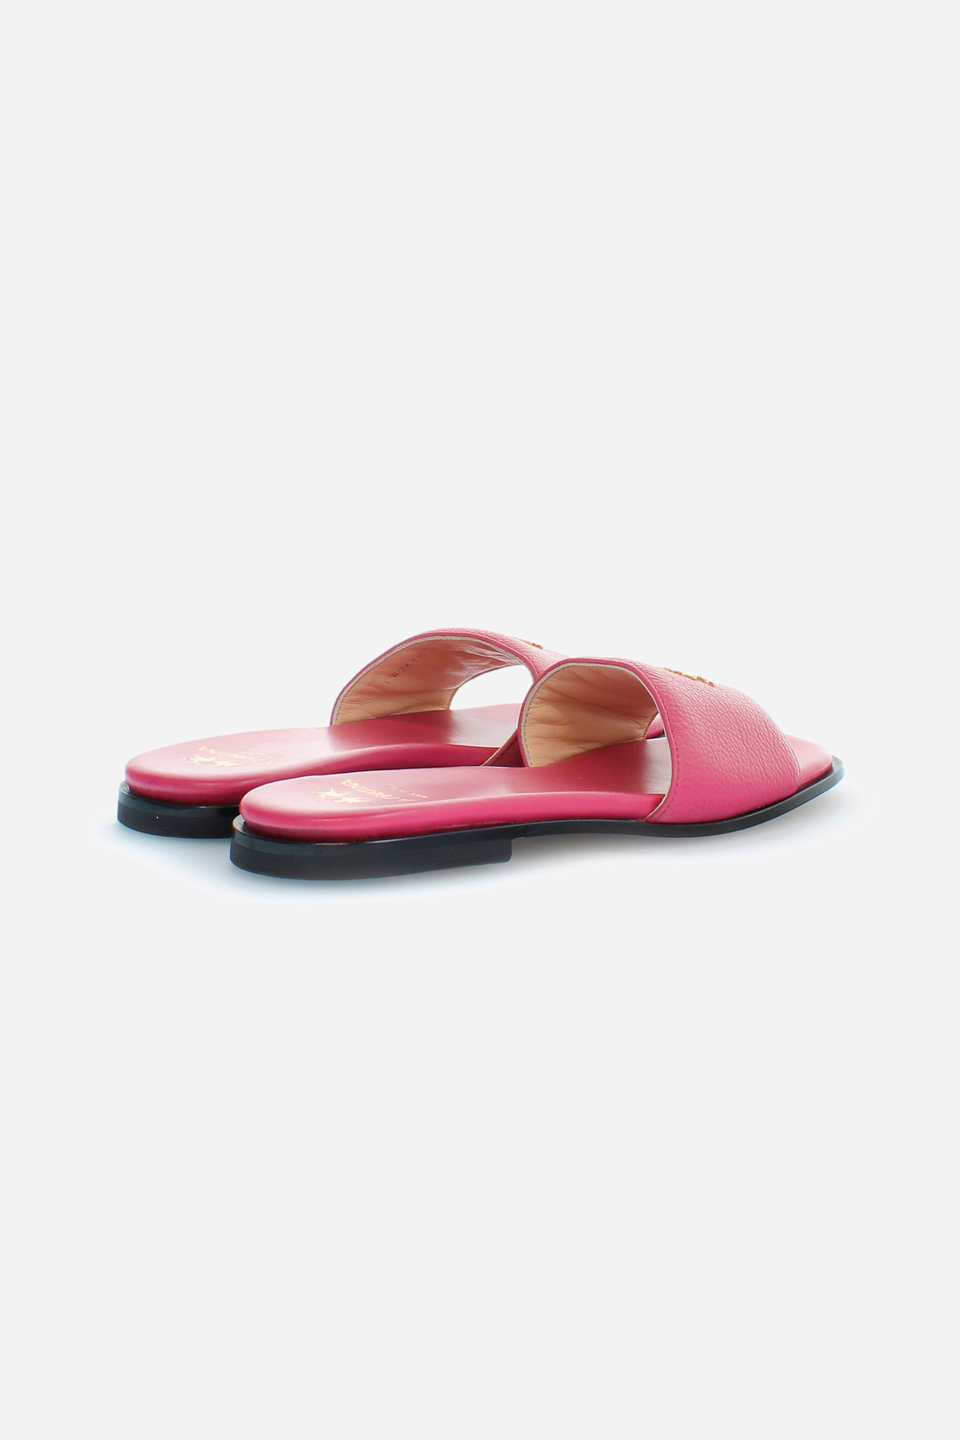 Sandalo da donna in pelle | La Martina - Official Online Shop